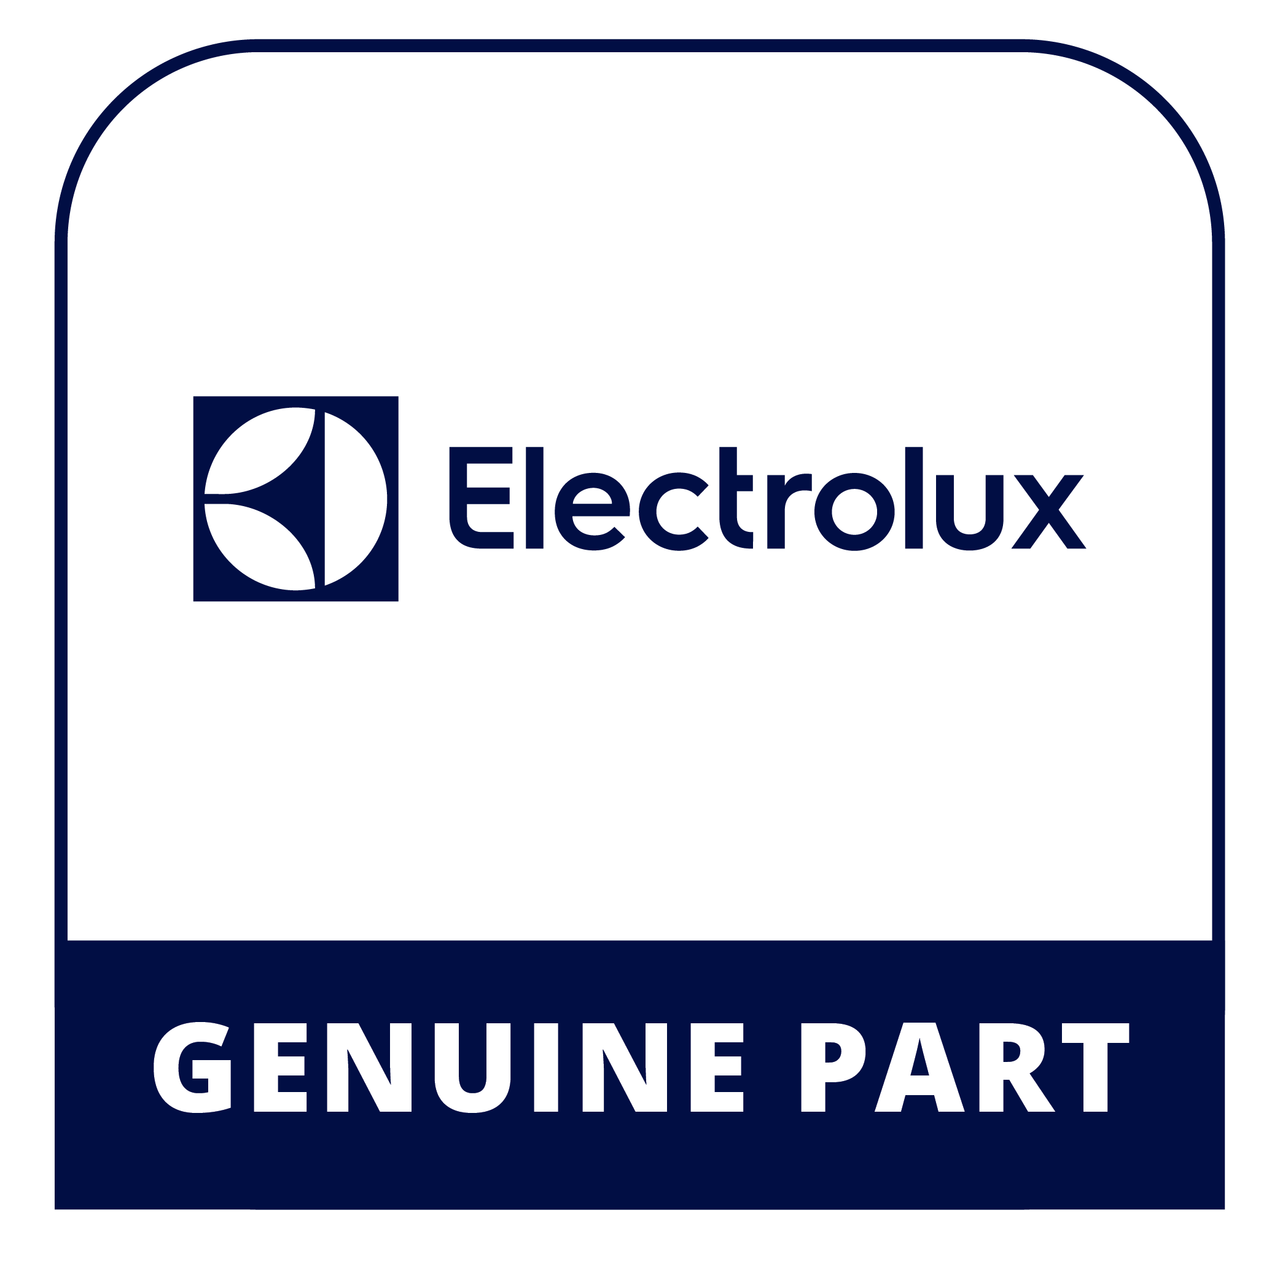 Frigidaire - Electrolux 5303918600 - Kit Water Tube - Genuine Electrolux Part